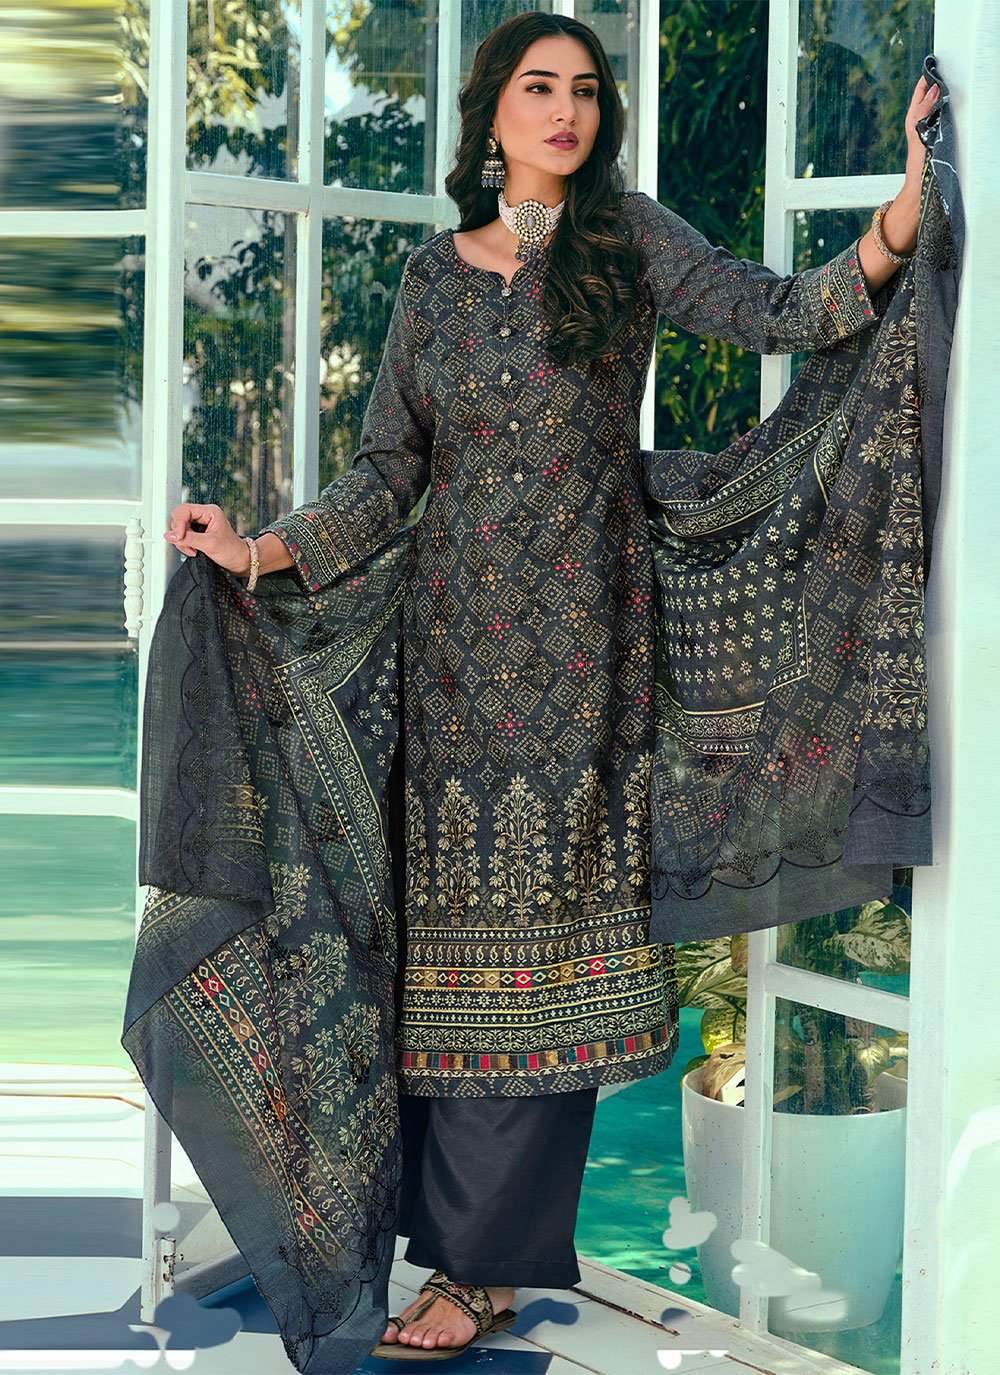 21 + Georgette matching Suit design | Printed suit design | Punjabi Suit |  Salwar suit designs - YouTube